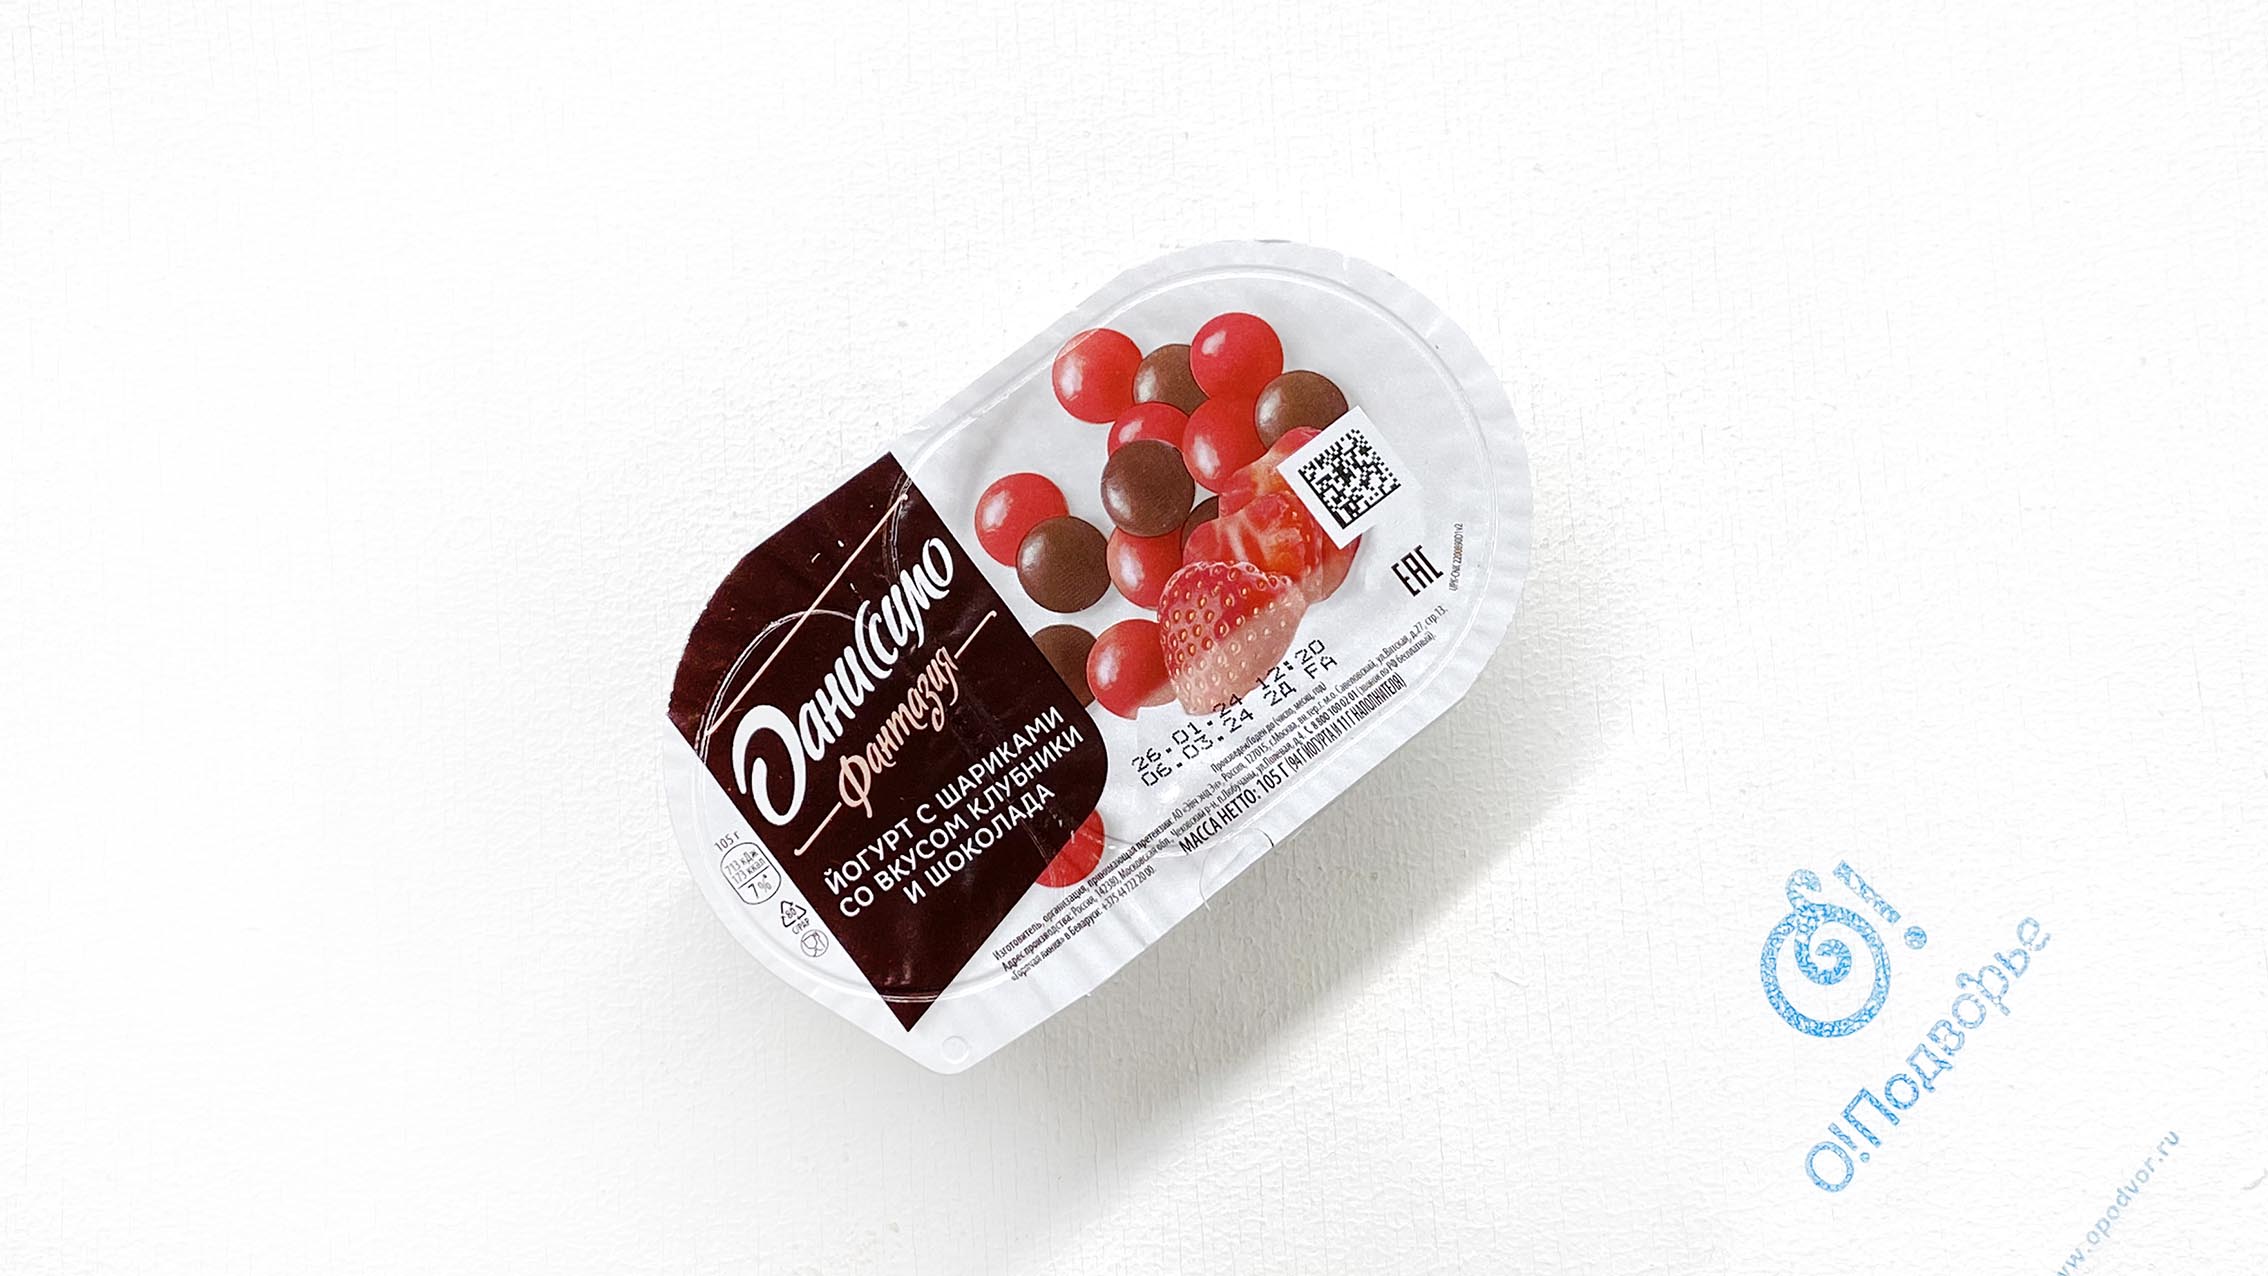 Йогурт с шариками со вкусом клубники и шоколада "Даниссимо фантазия", АО "Эич энд Эн", 105 грамм, (Зл)